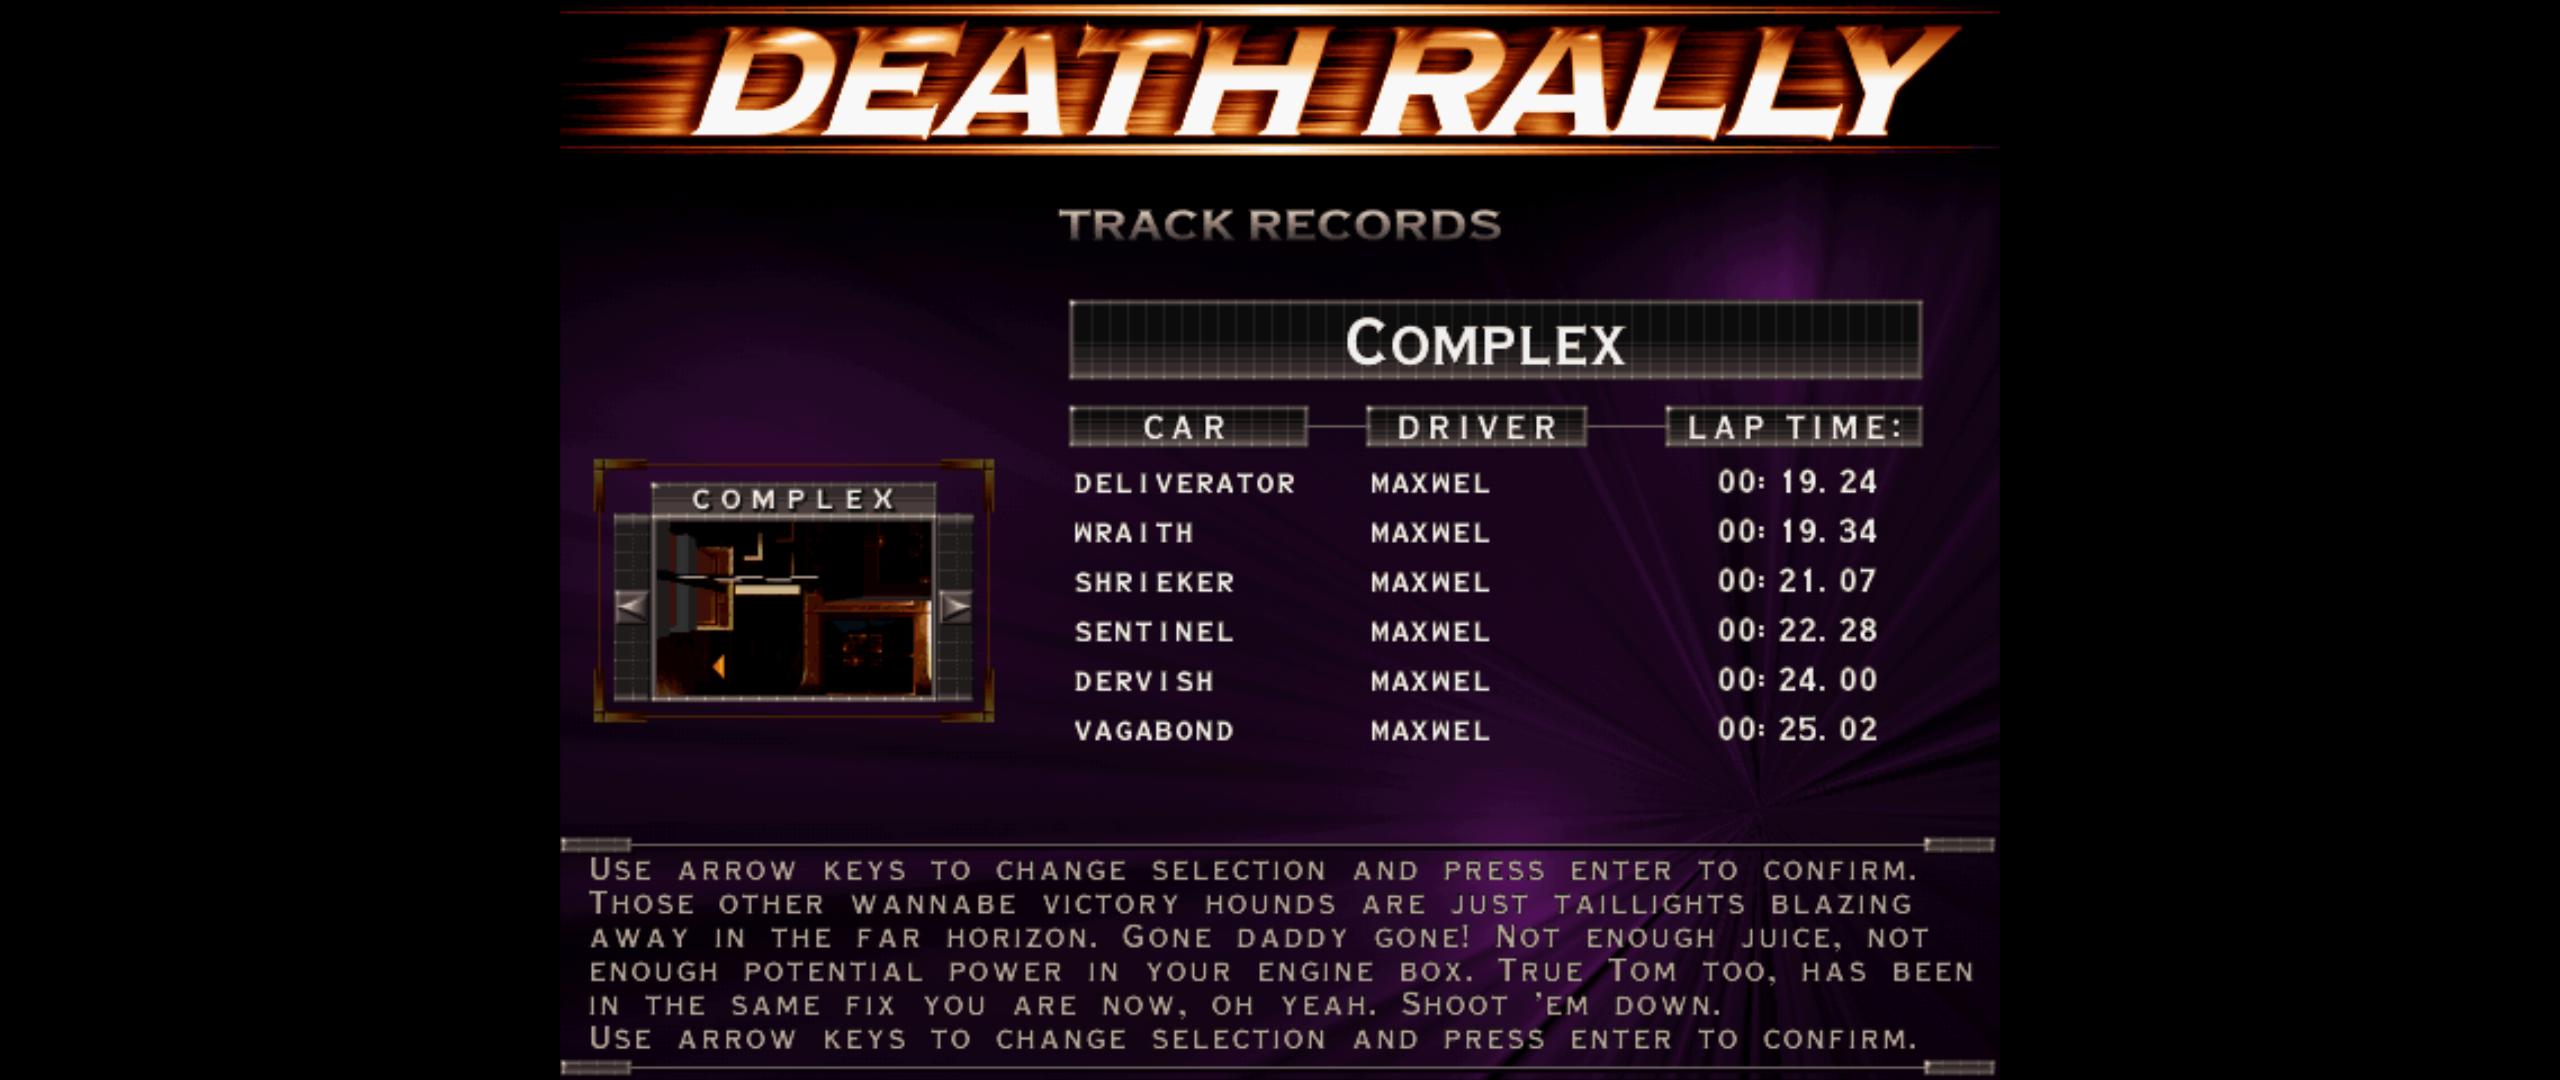 Maxwel: Death Rally [Complex, Deliverator Car] (PC) 0:00:19.24 points on 2016-03-04 06:46:45